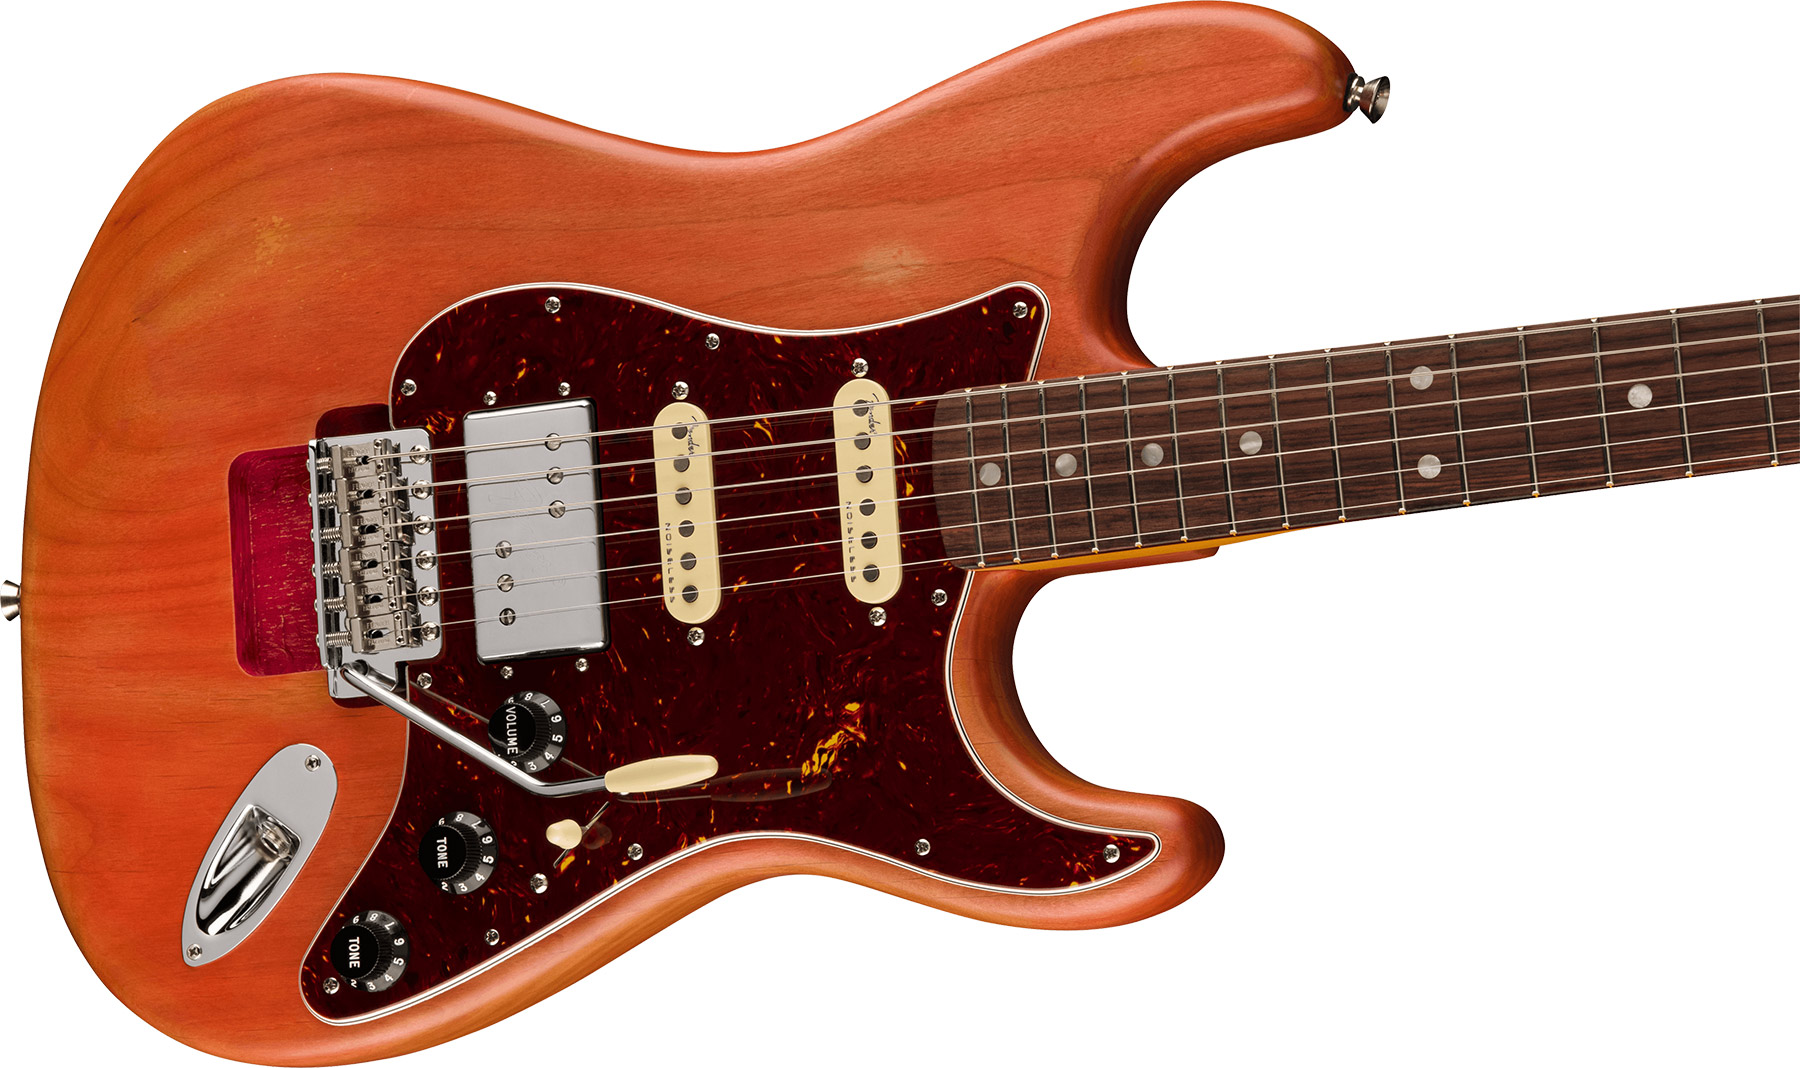 Fender Michael Landau Strat Coma Stories Usa Signature Hss Trem Rw - Coma Red - Str shape electric guitar - Variation 2